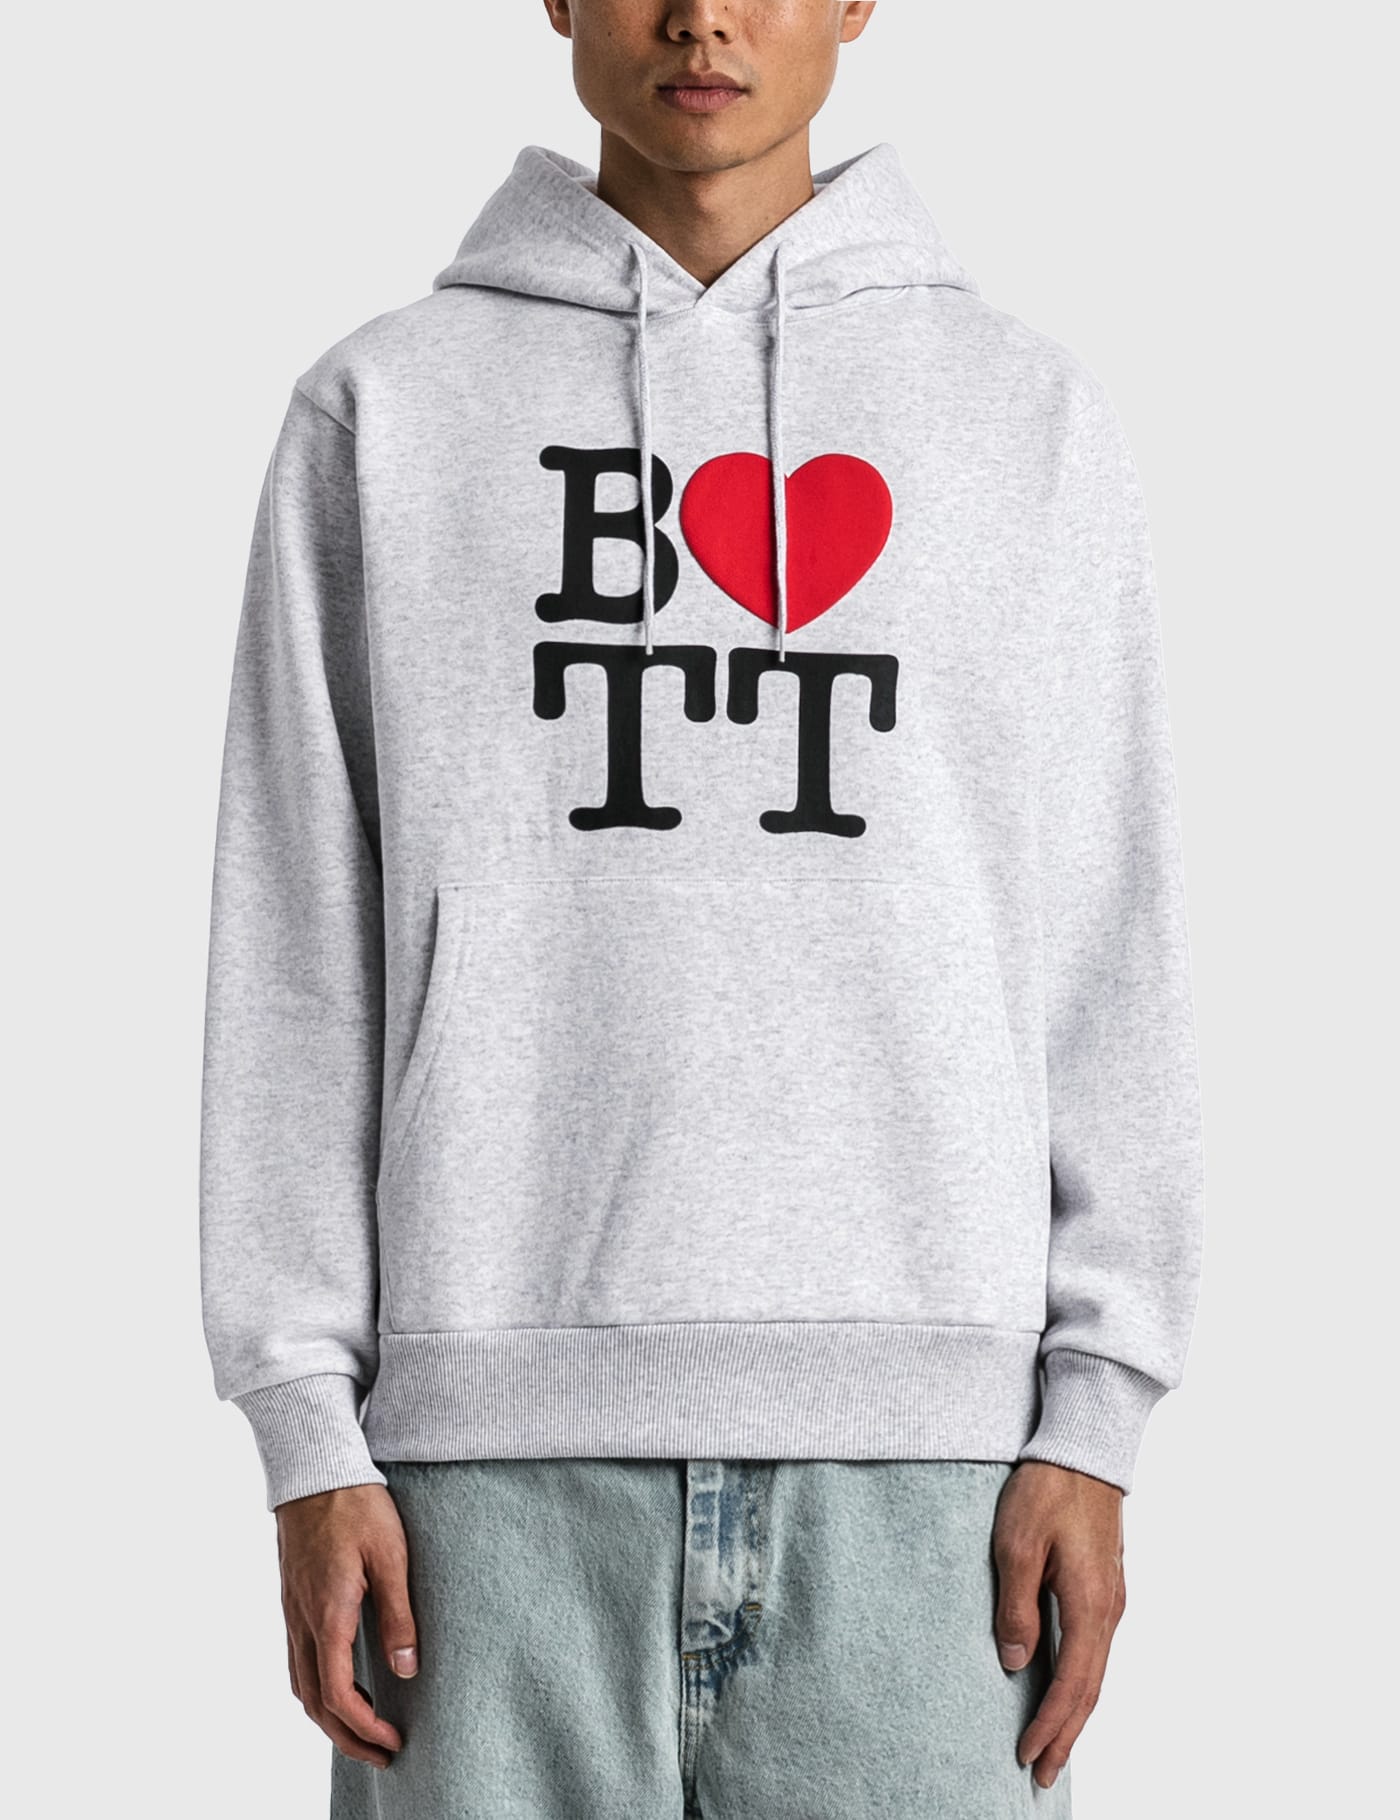 BoTT - Love Bott Pullover Hoodie | HBX - Globally Curated Fashion